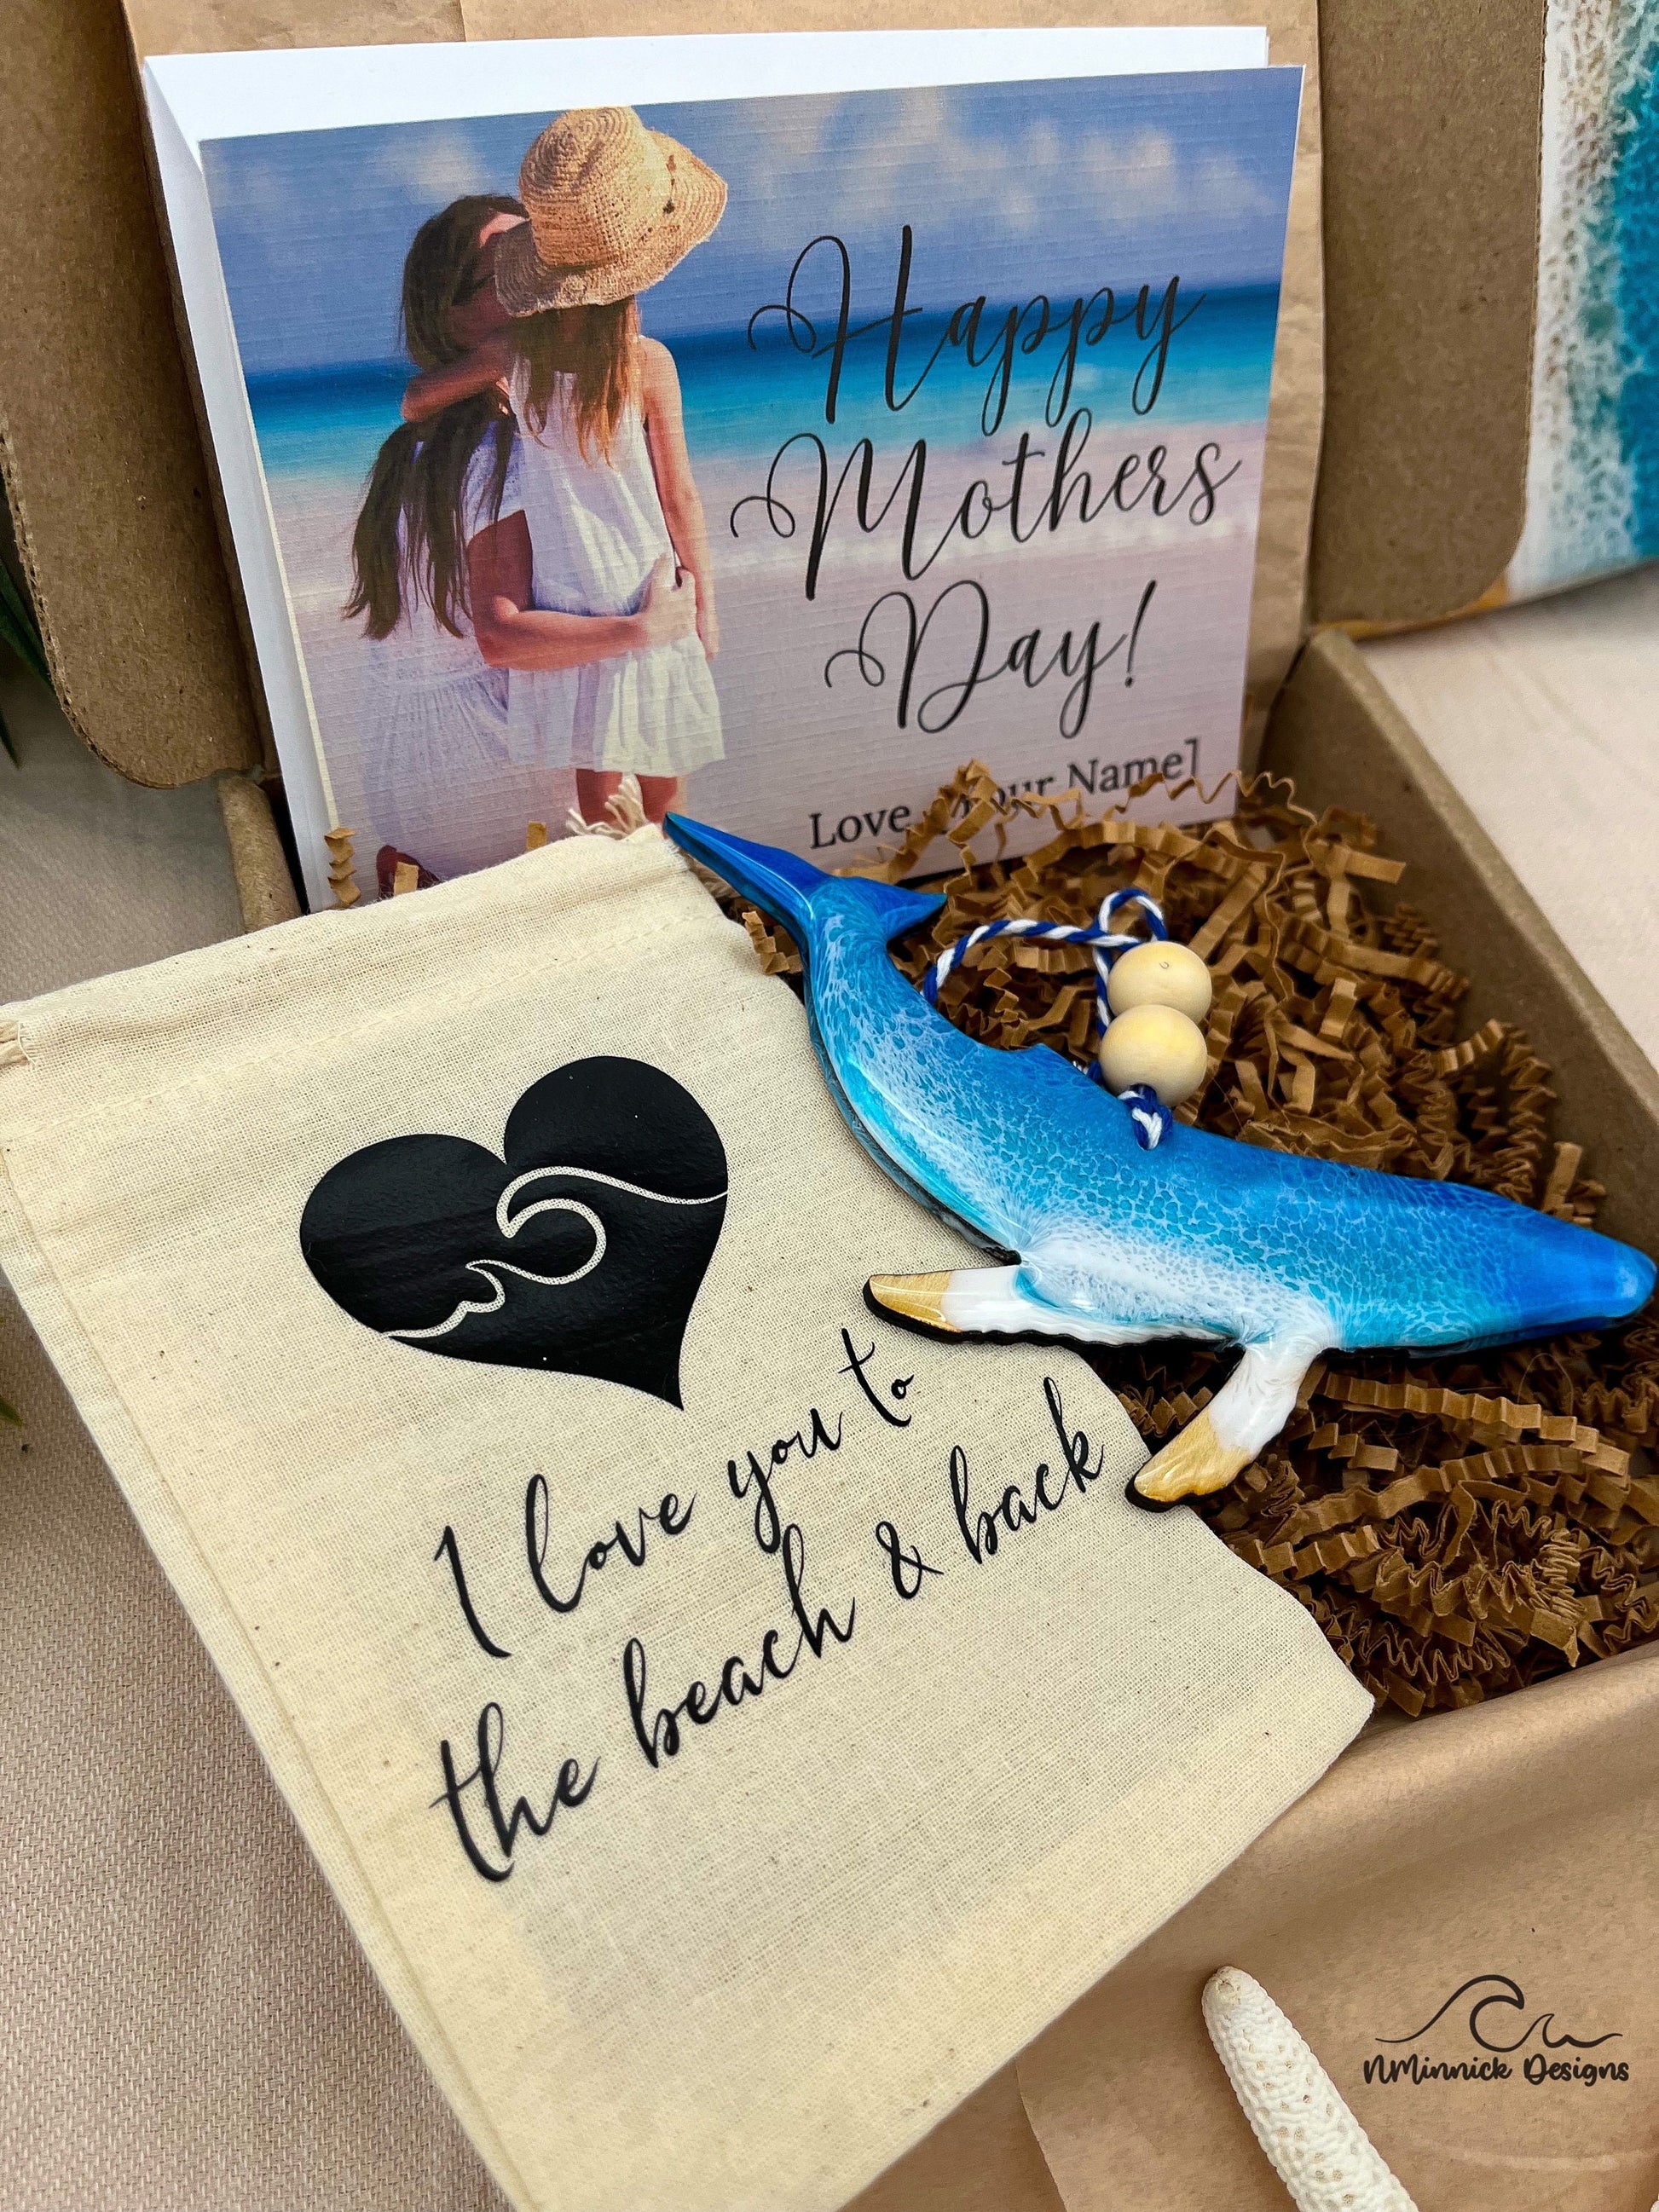 Humpback Whale Ornament Gift Box with Keepsake Ornament Gift Bag and Custom Card